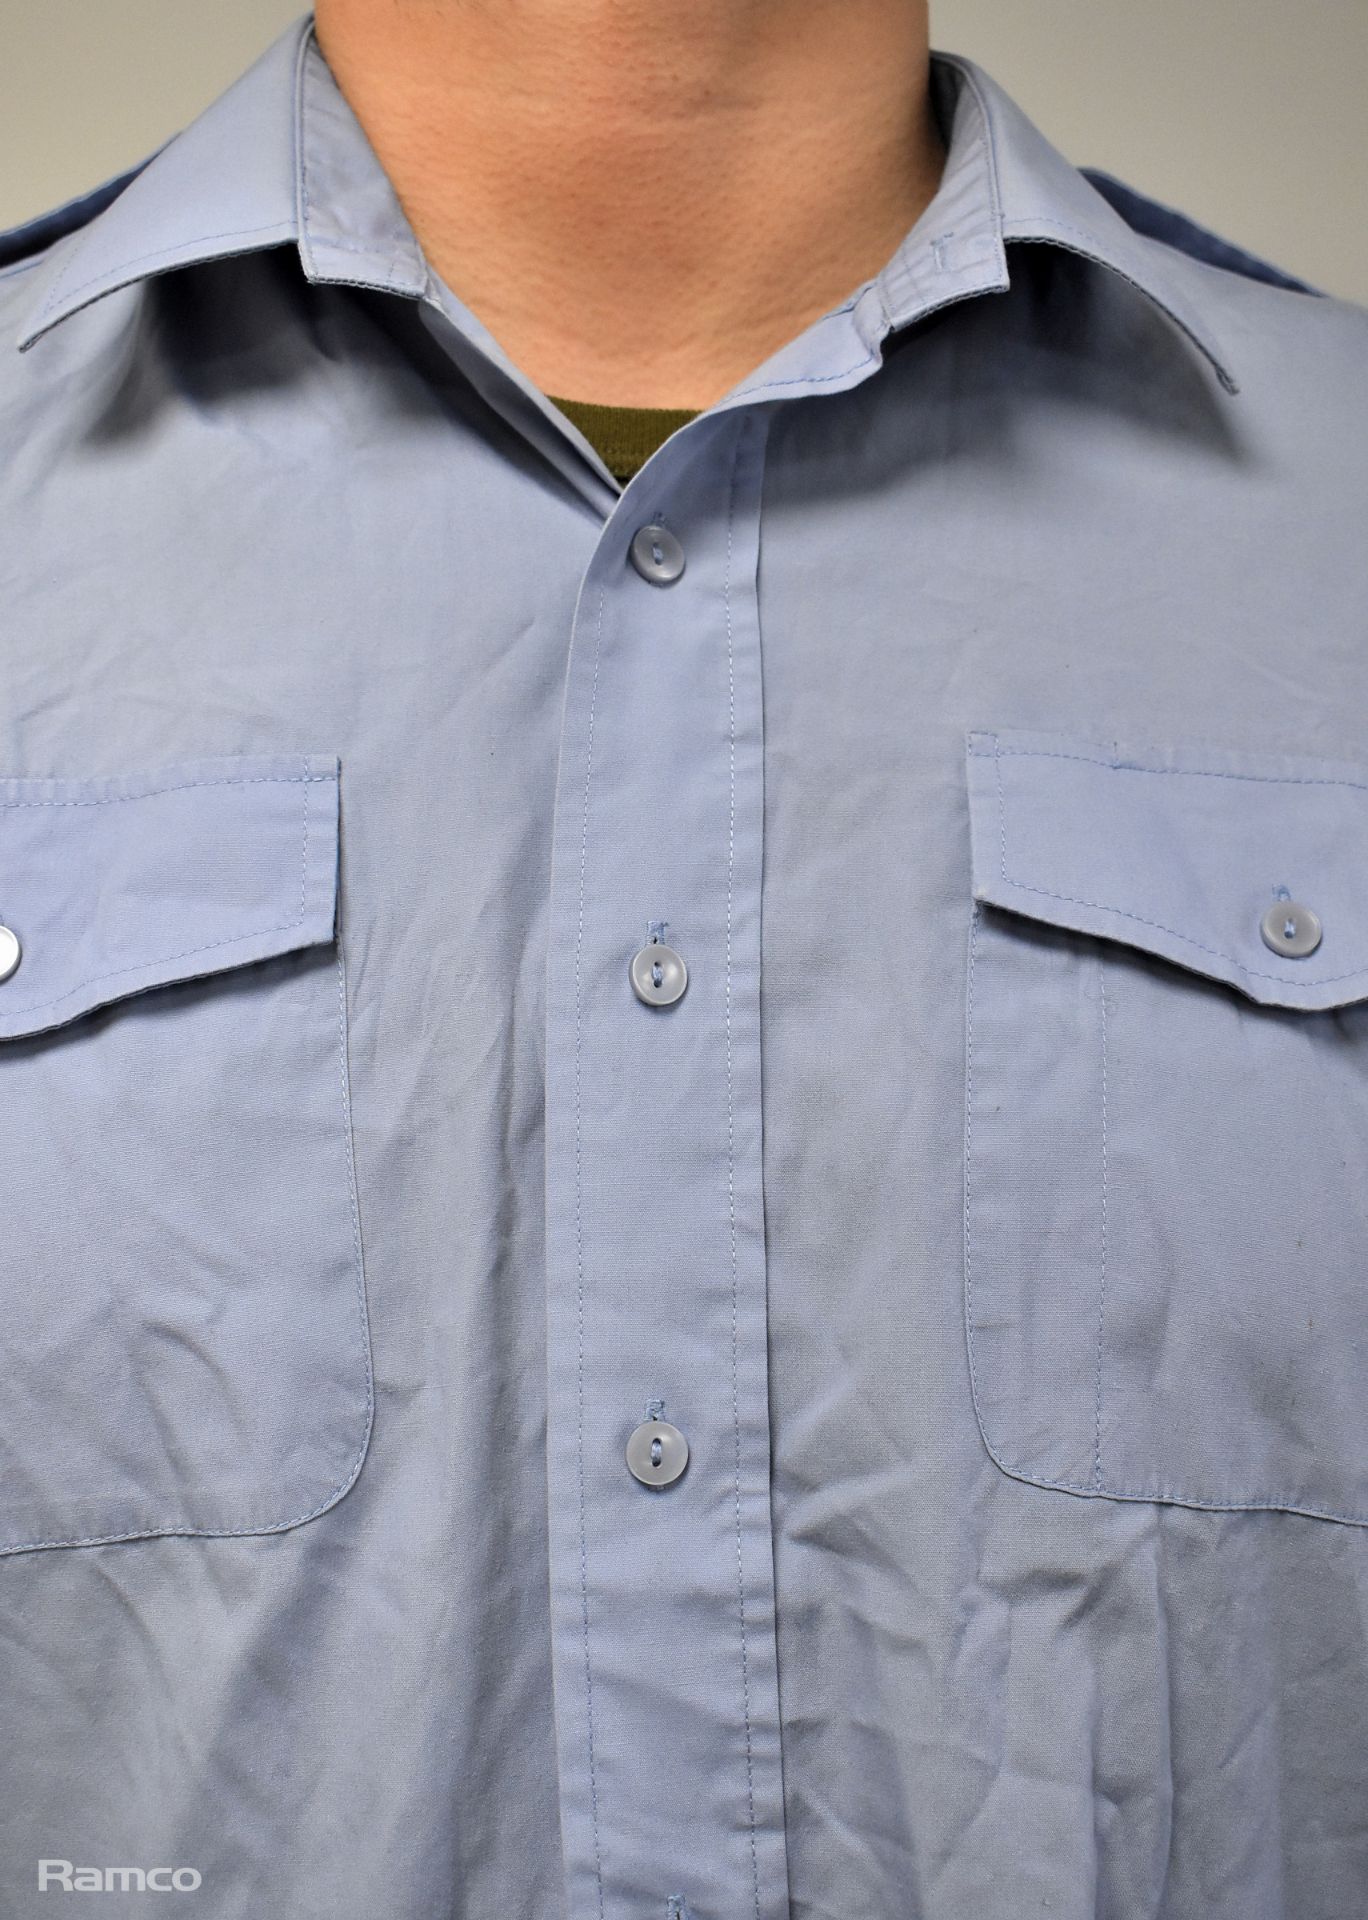 80x British RAF short sleeved shirts - Blue - mixed grades and sizes - Image 5 of 12